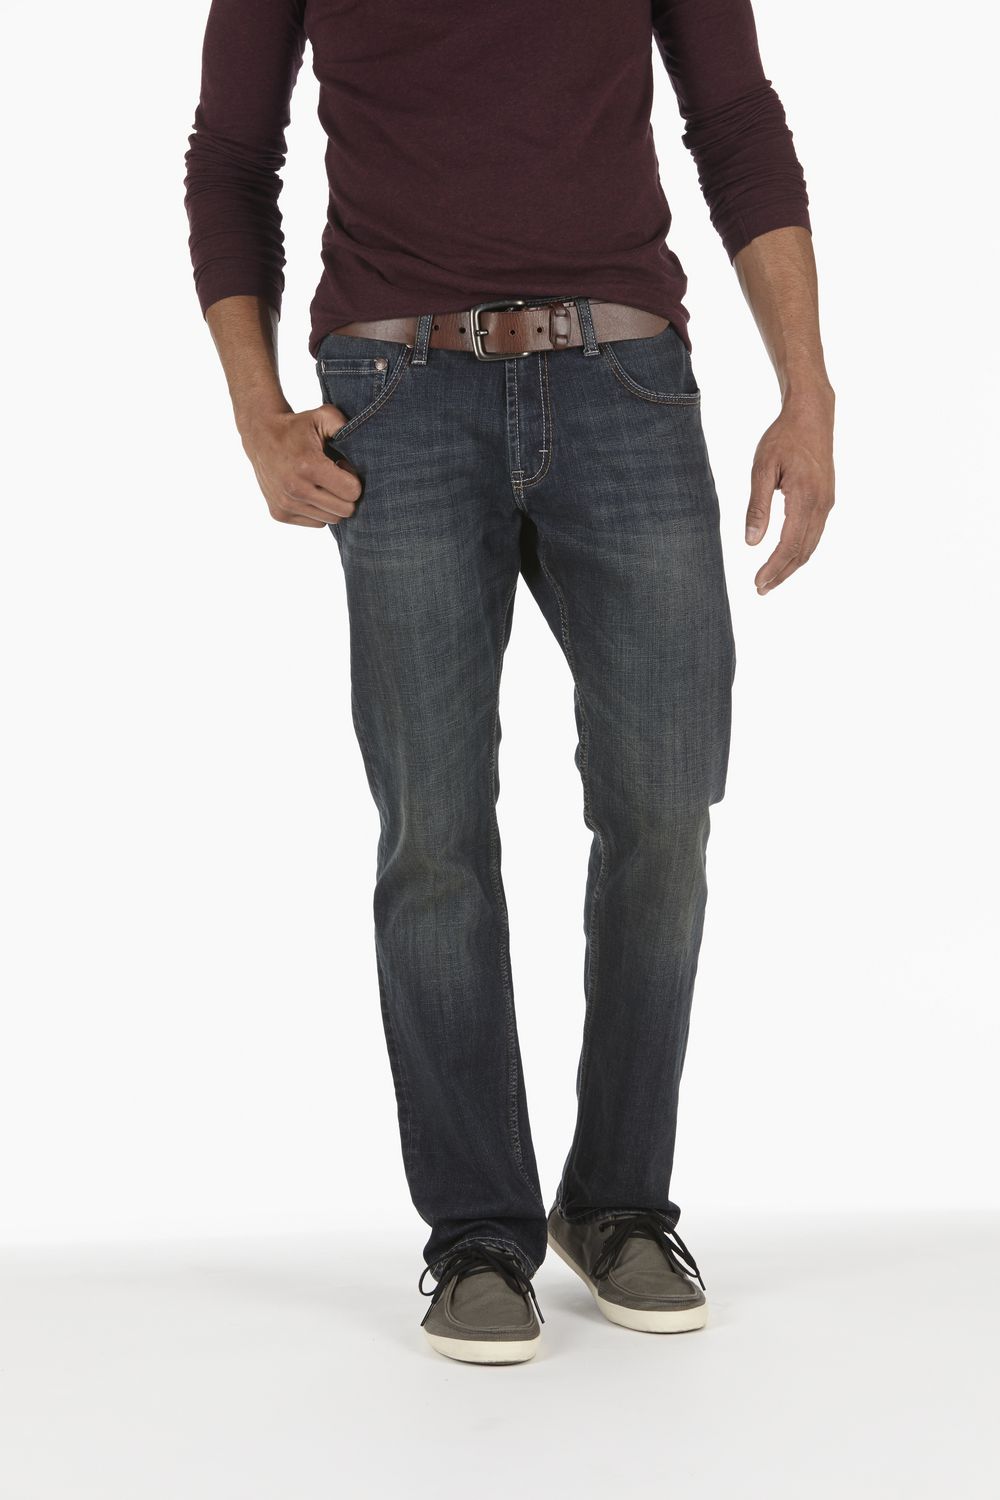 Wrangler Jeans Co. Red Vintage Slim, Tinted Straight Leg | Walmart Canada